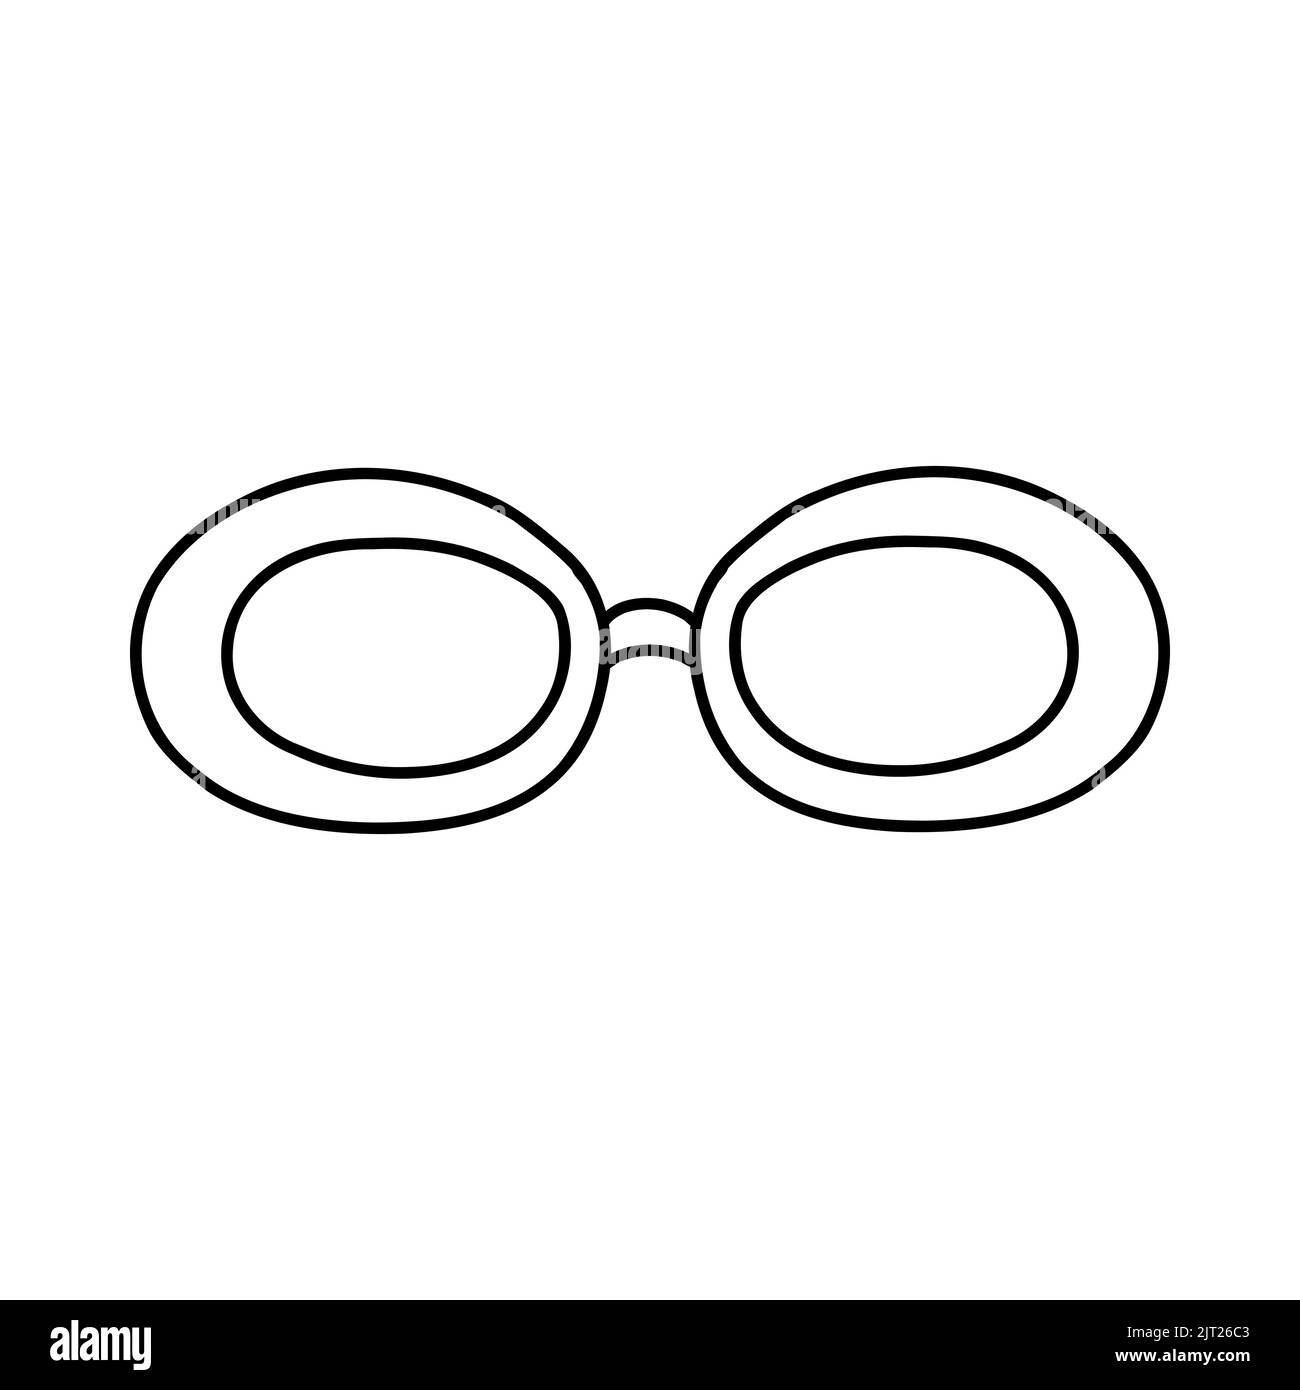 Hand Drawn Doodle Glasses Vector Sketch Illustration Of Black Outline Eyeglasses Linear Icon